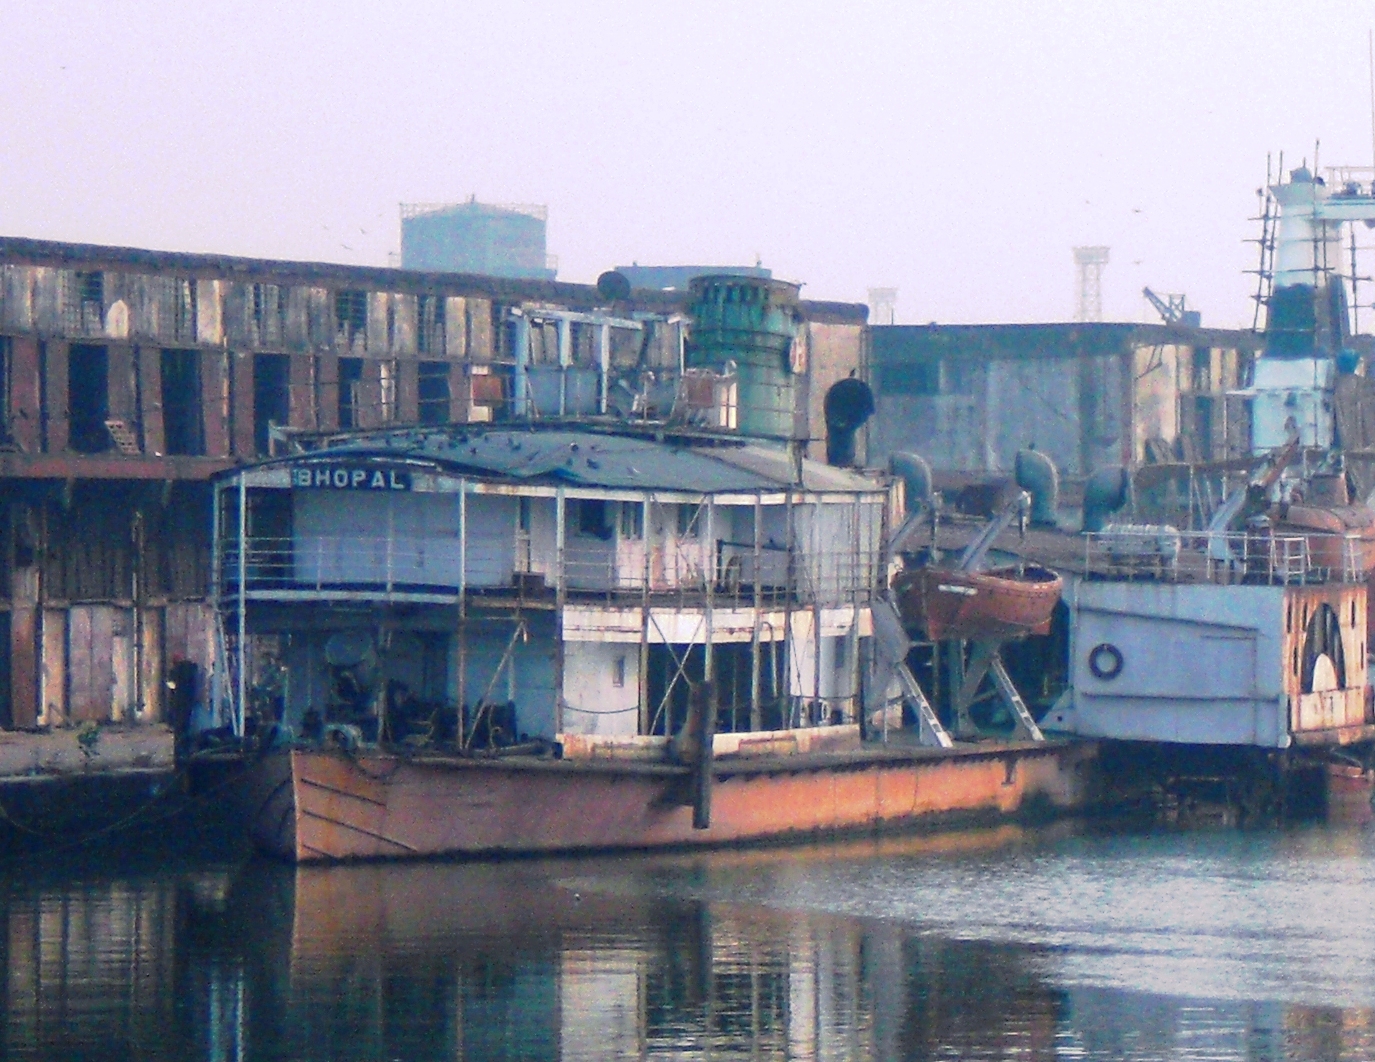 paddle-steamer-bhopal-2014